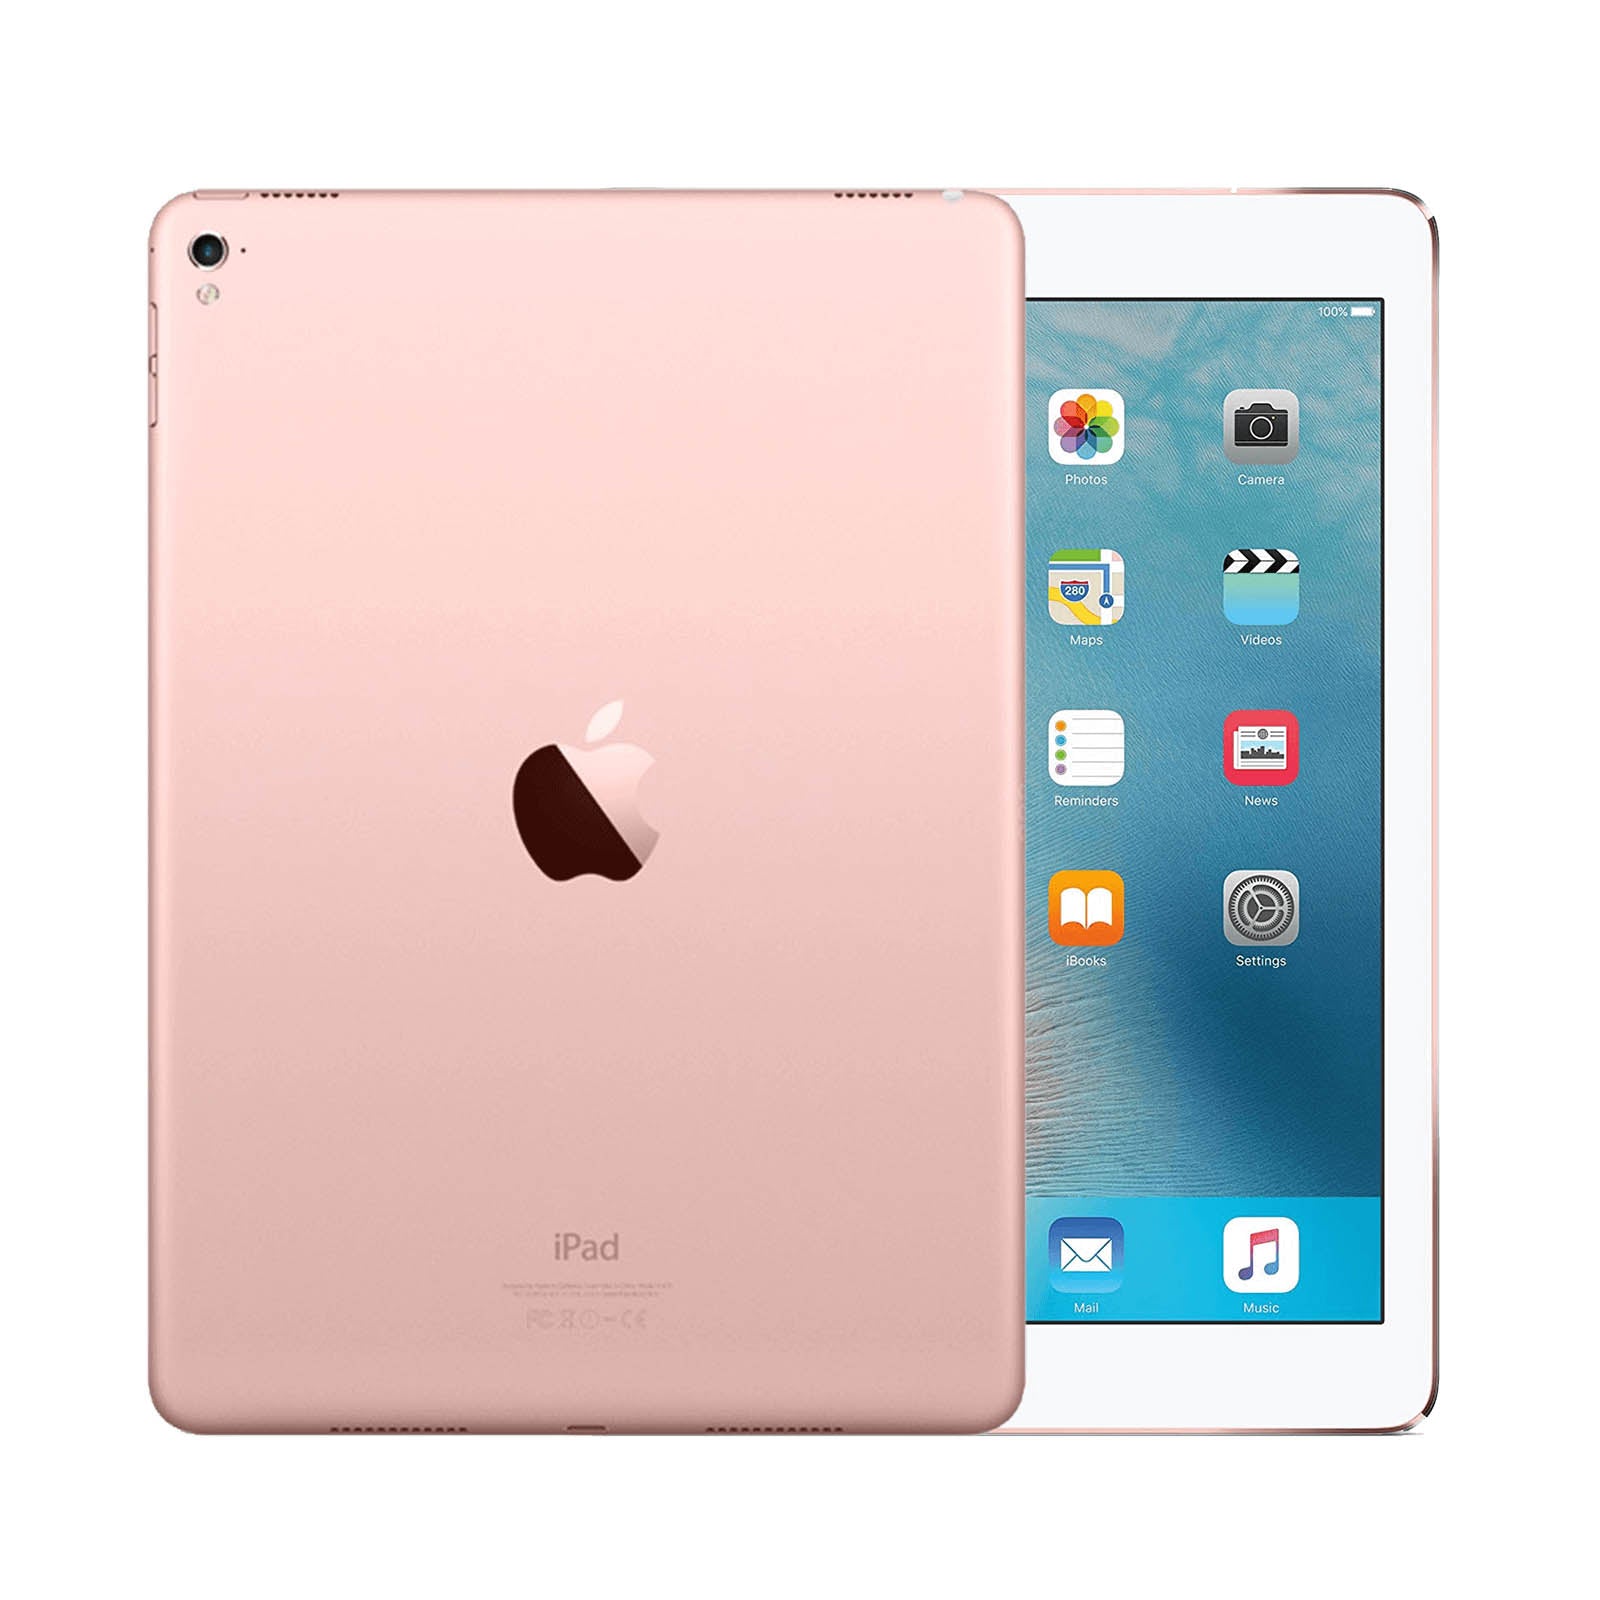 iPad Pro 9.7 Inch 256GB WiFi Space Grau Gut WiFi